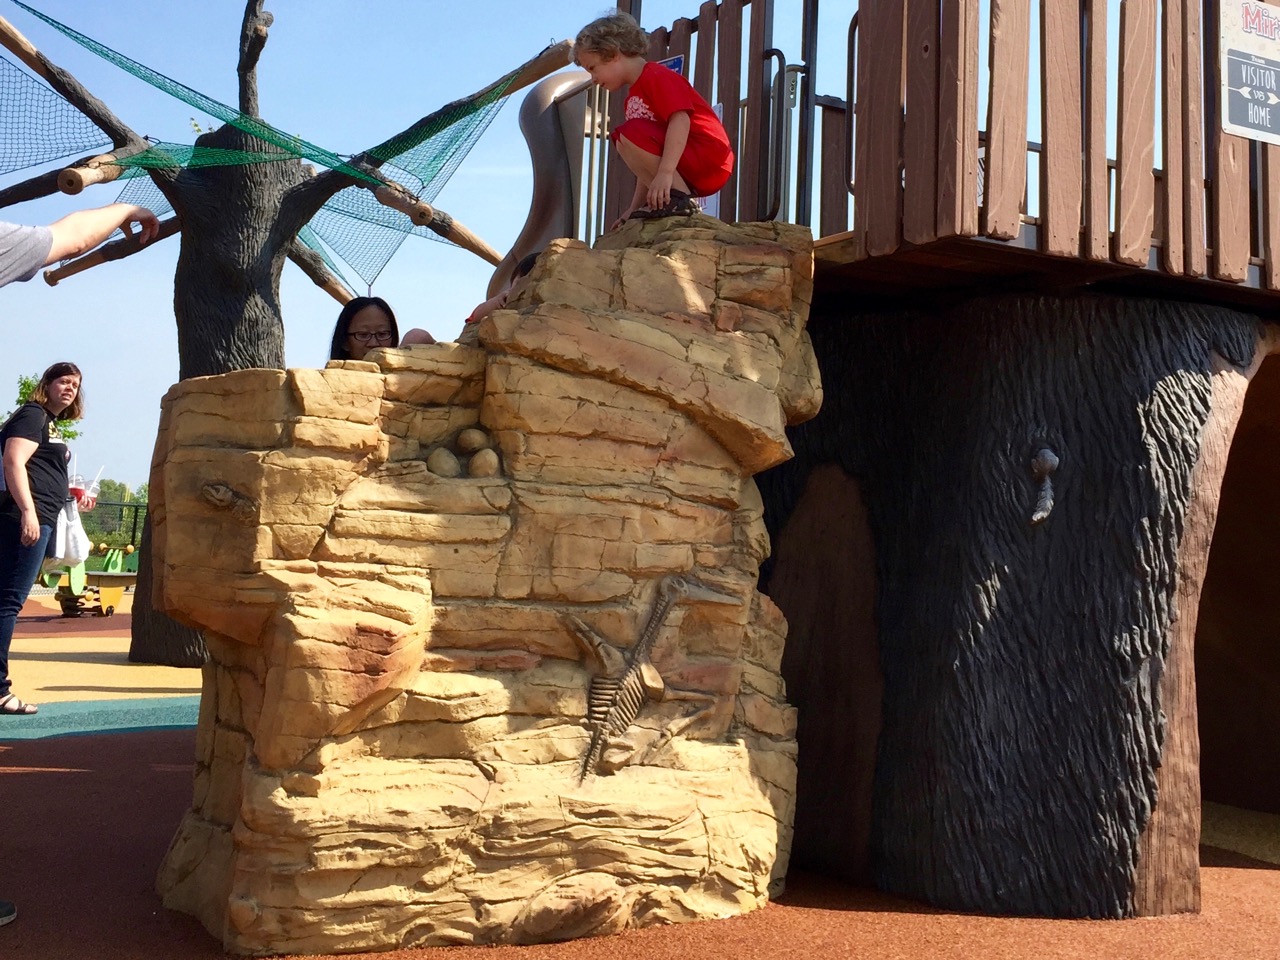 Playground rock climber